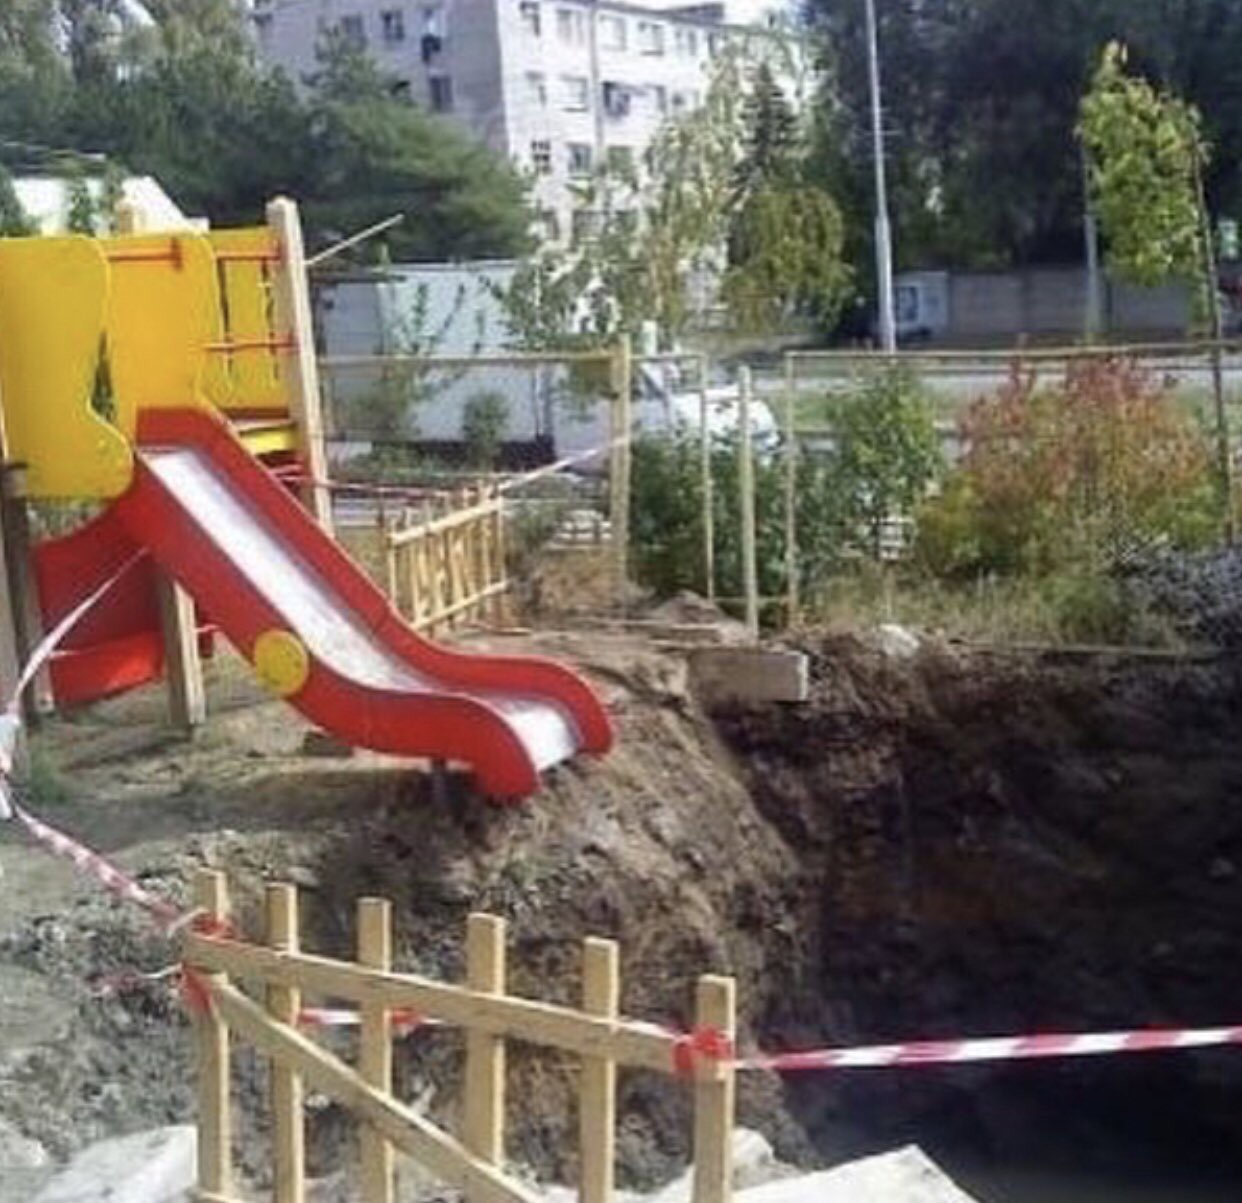 dangerous playgrounds